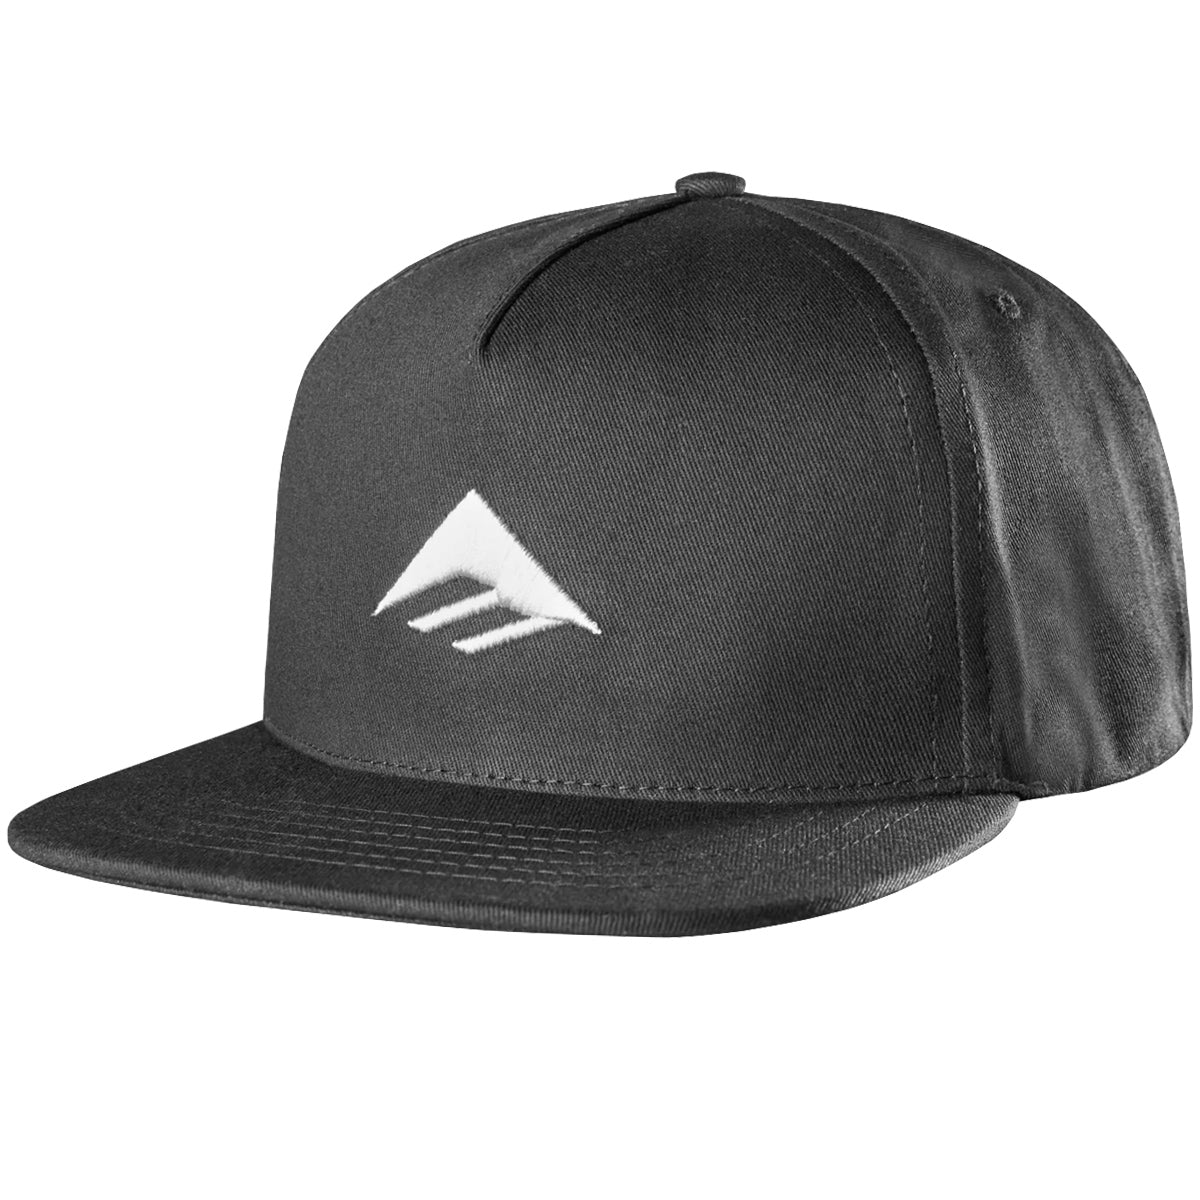 Emerica Classic Snapback Hat - Black/White image 1